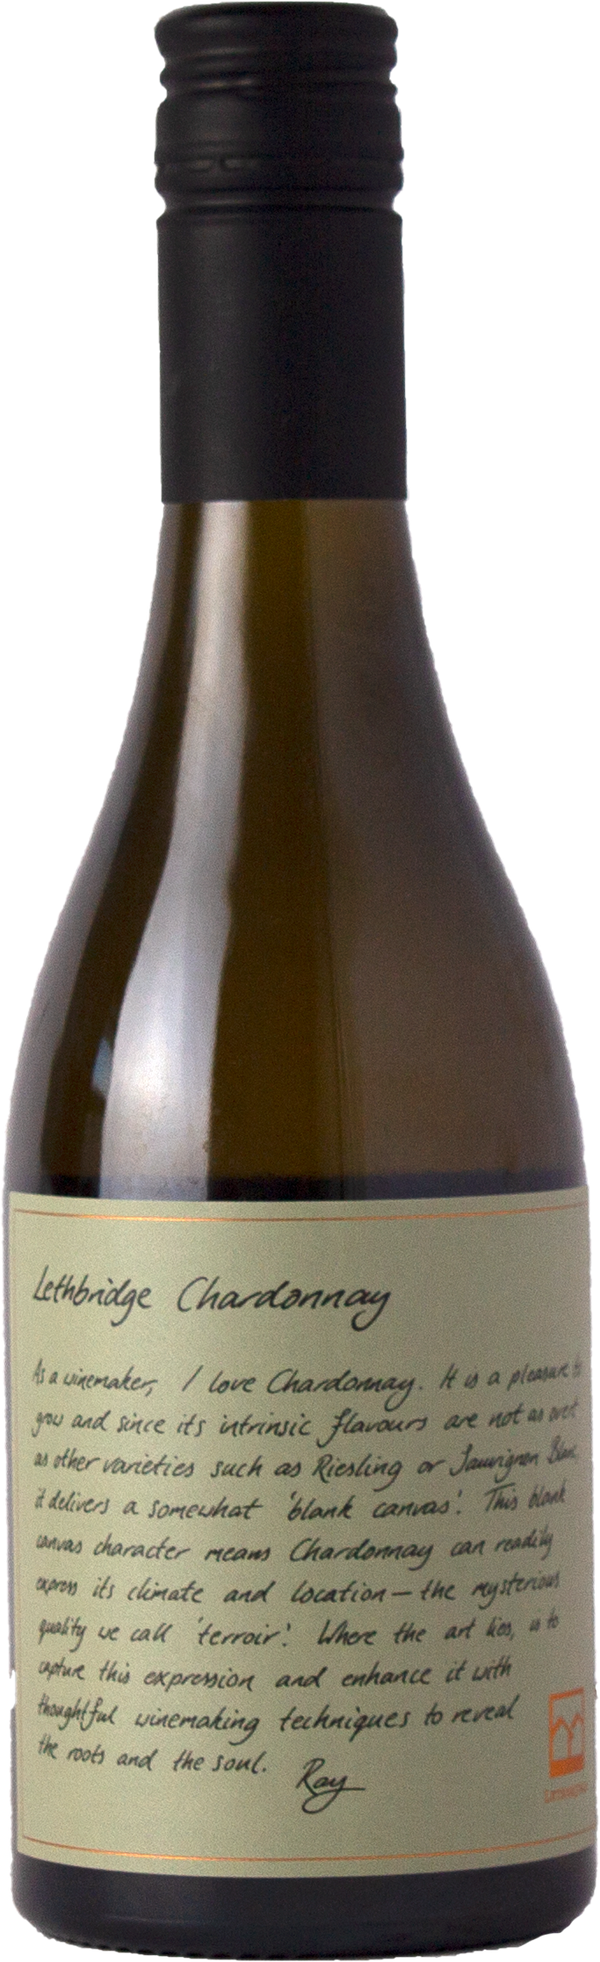 Lethbridge Chardonnay 2022 (375ml)